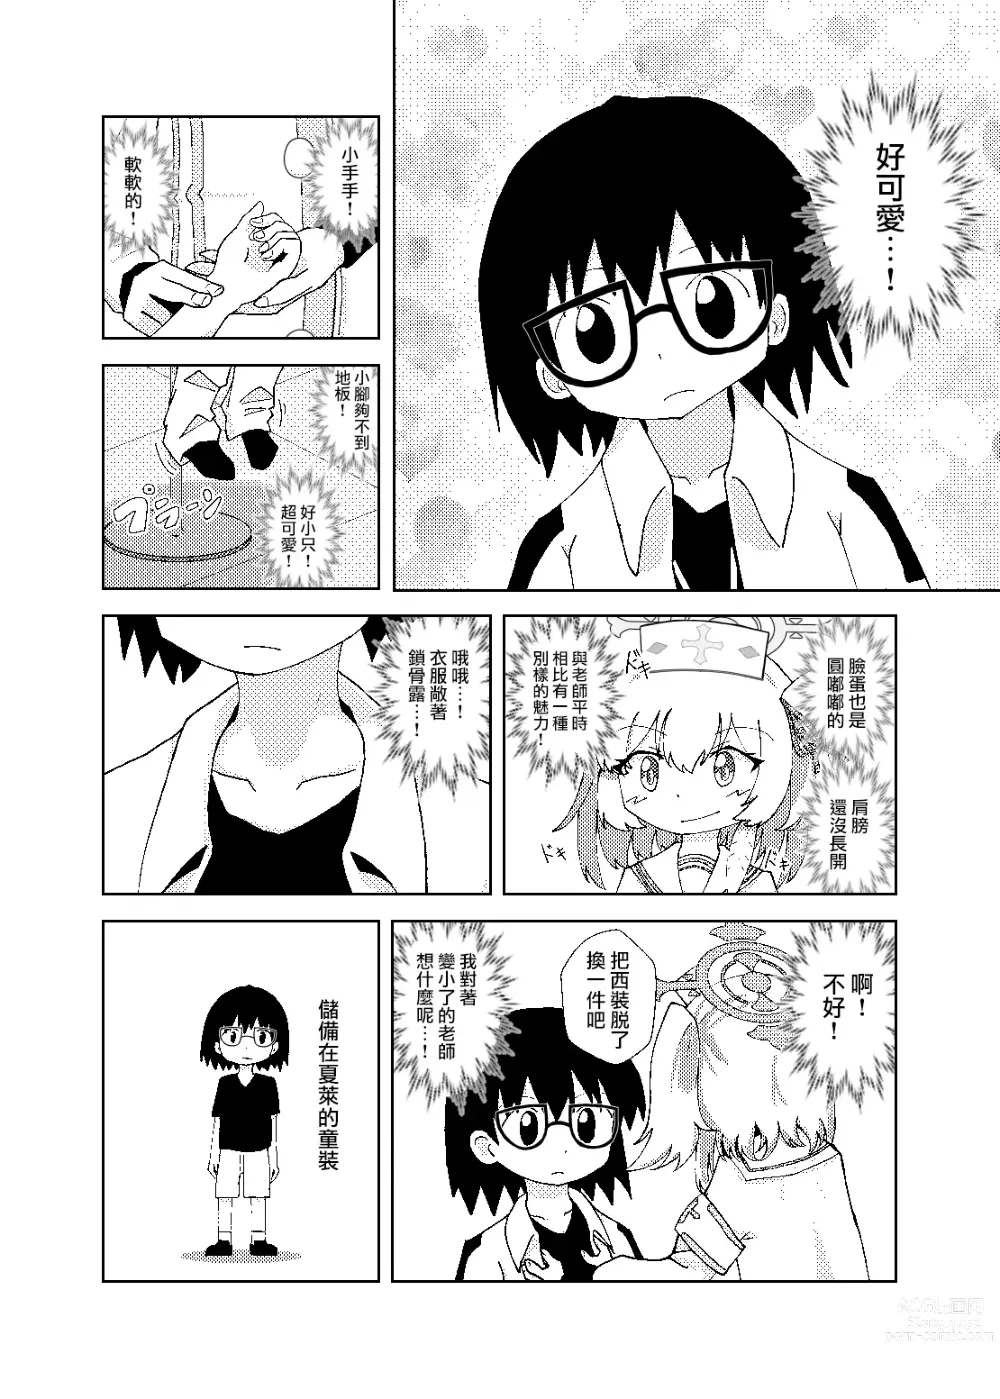 Page 5 of doujinshi 芹奈同學用愛悉心照料變成正太的老師